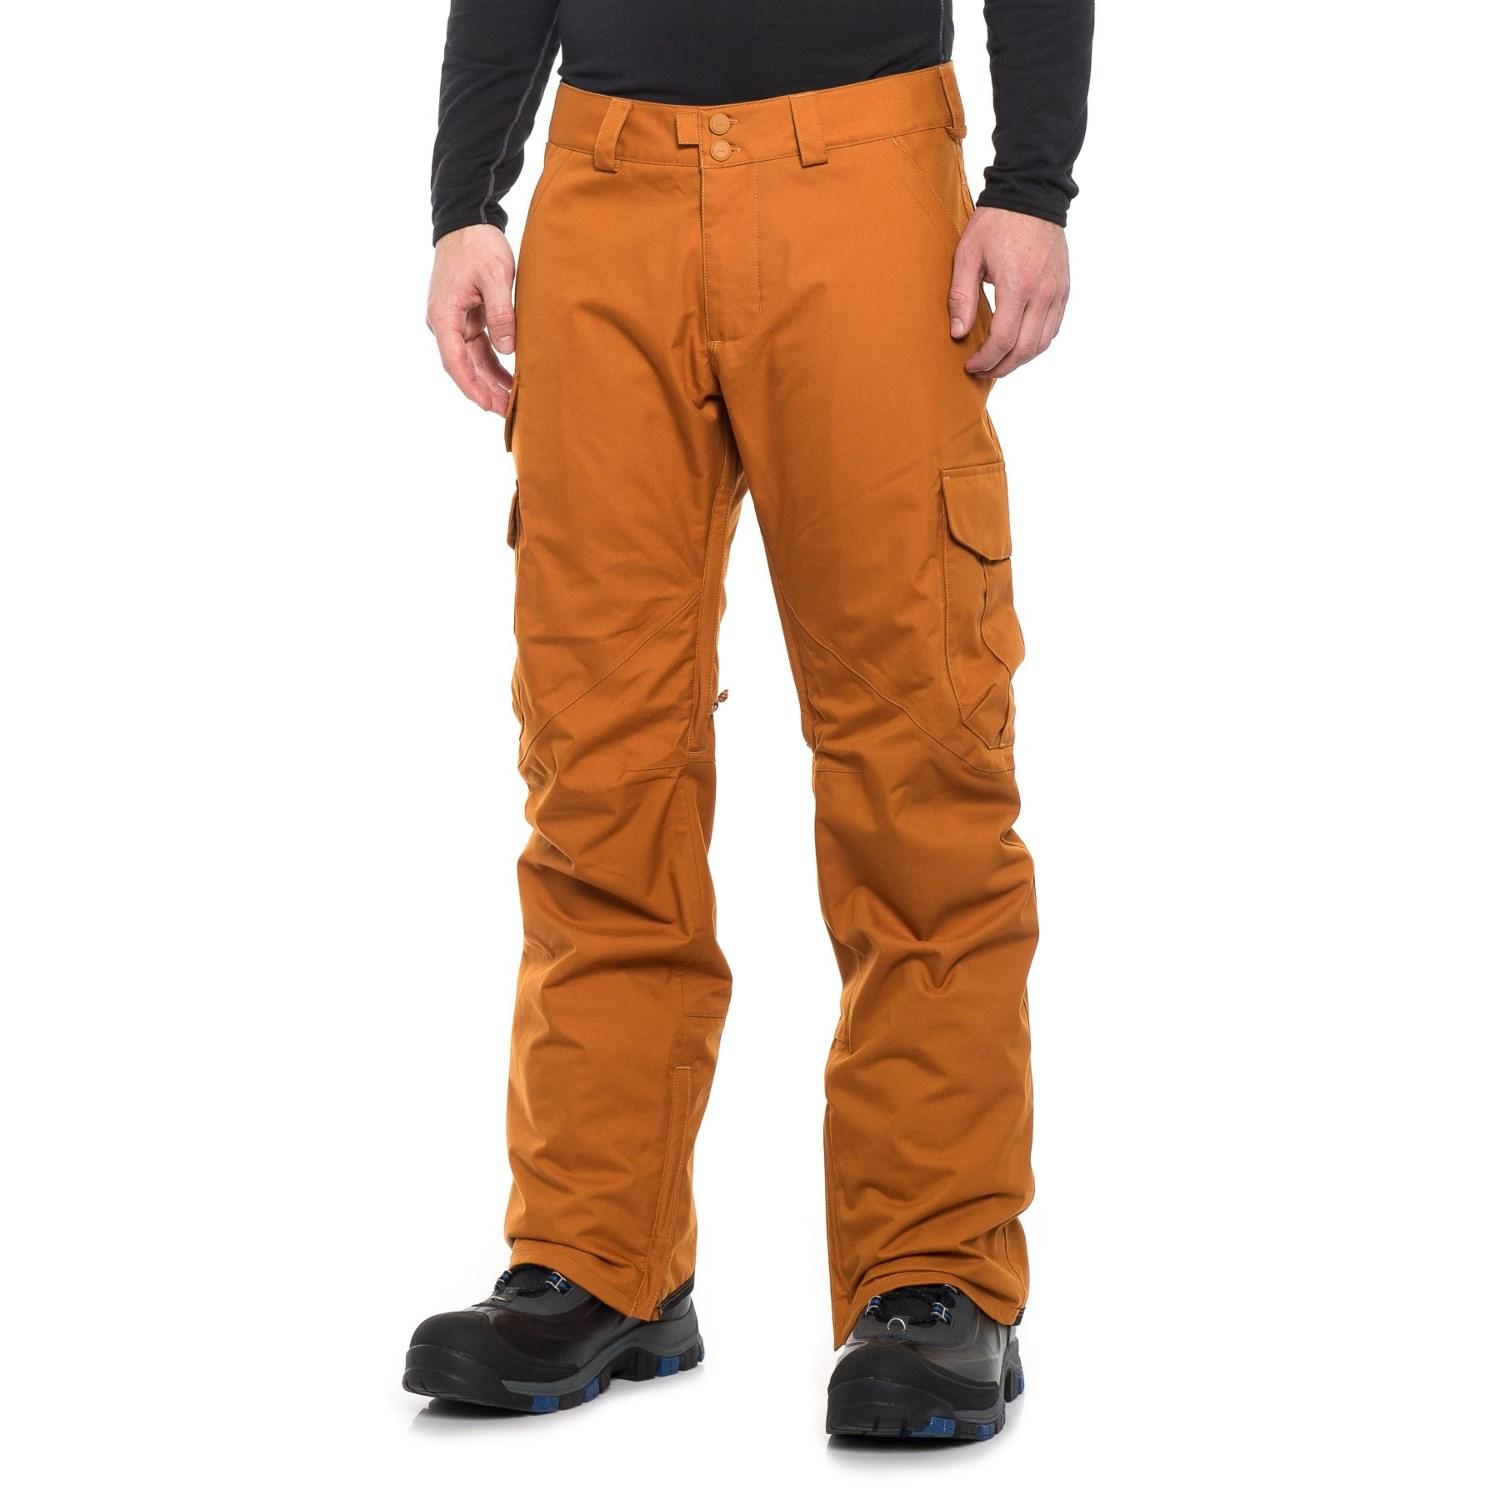 Burton Cargo Mid Fit Snowboard Pants in Orange for Men - Lyst